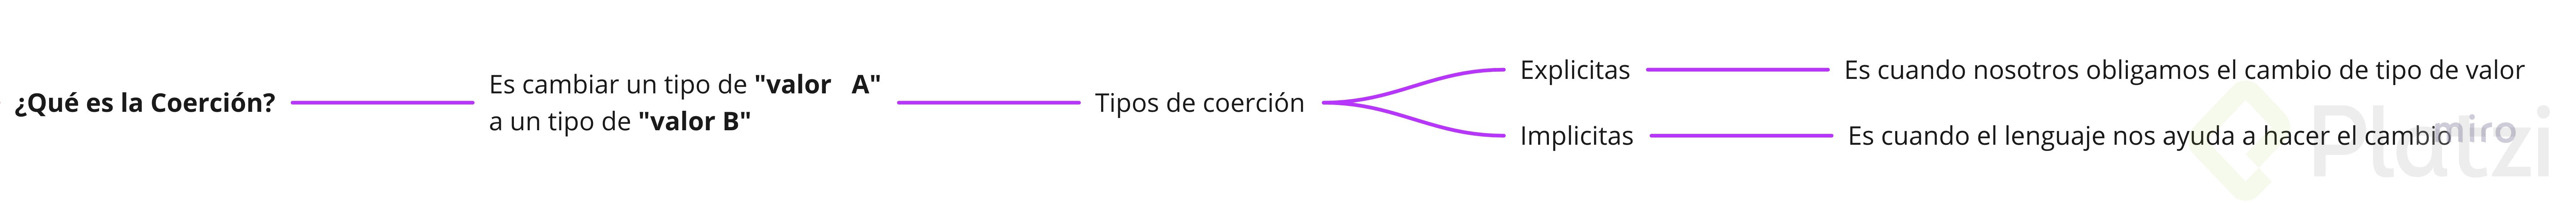 coersion.jpg